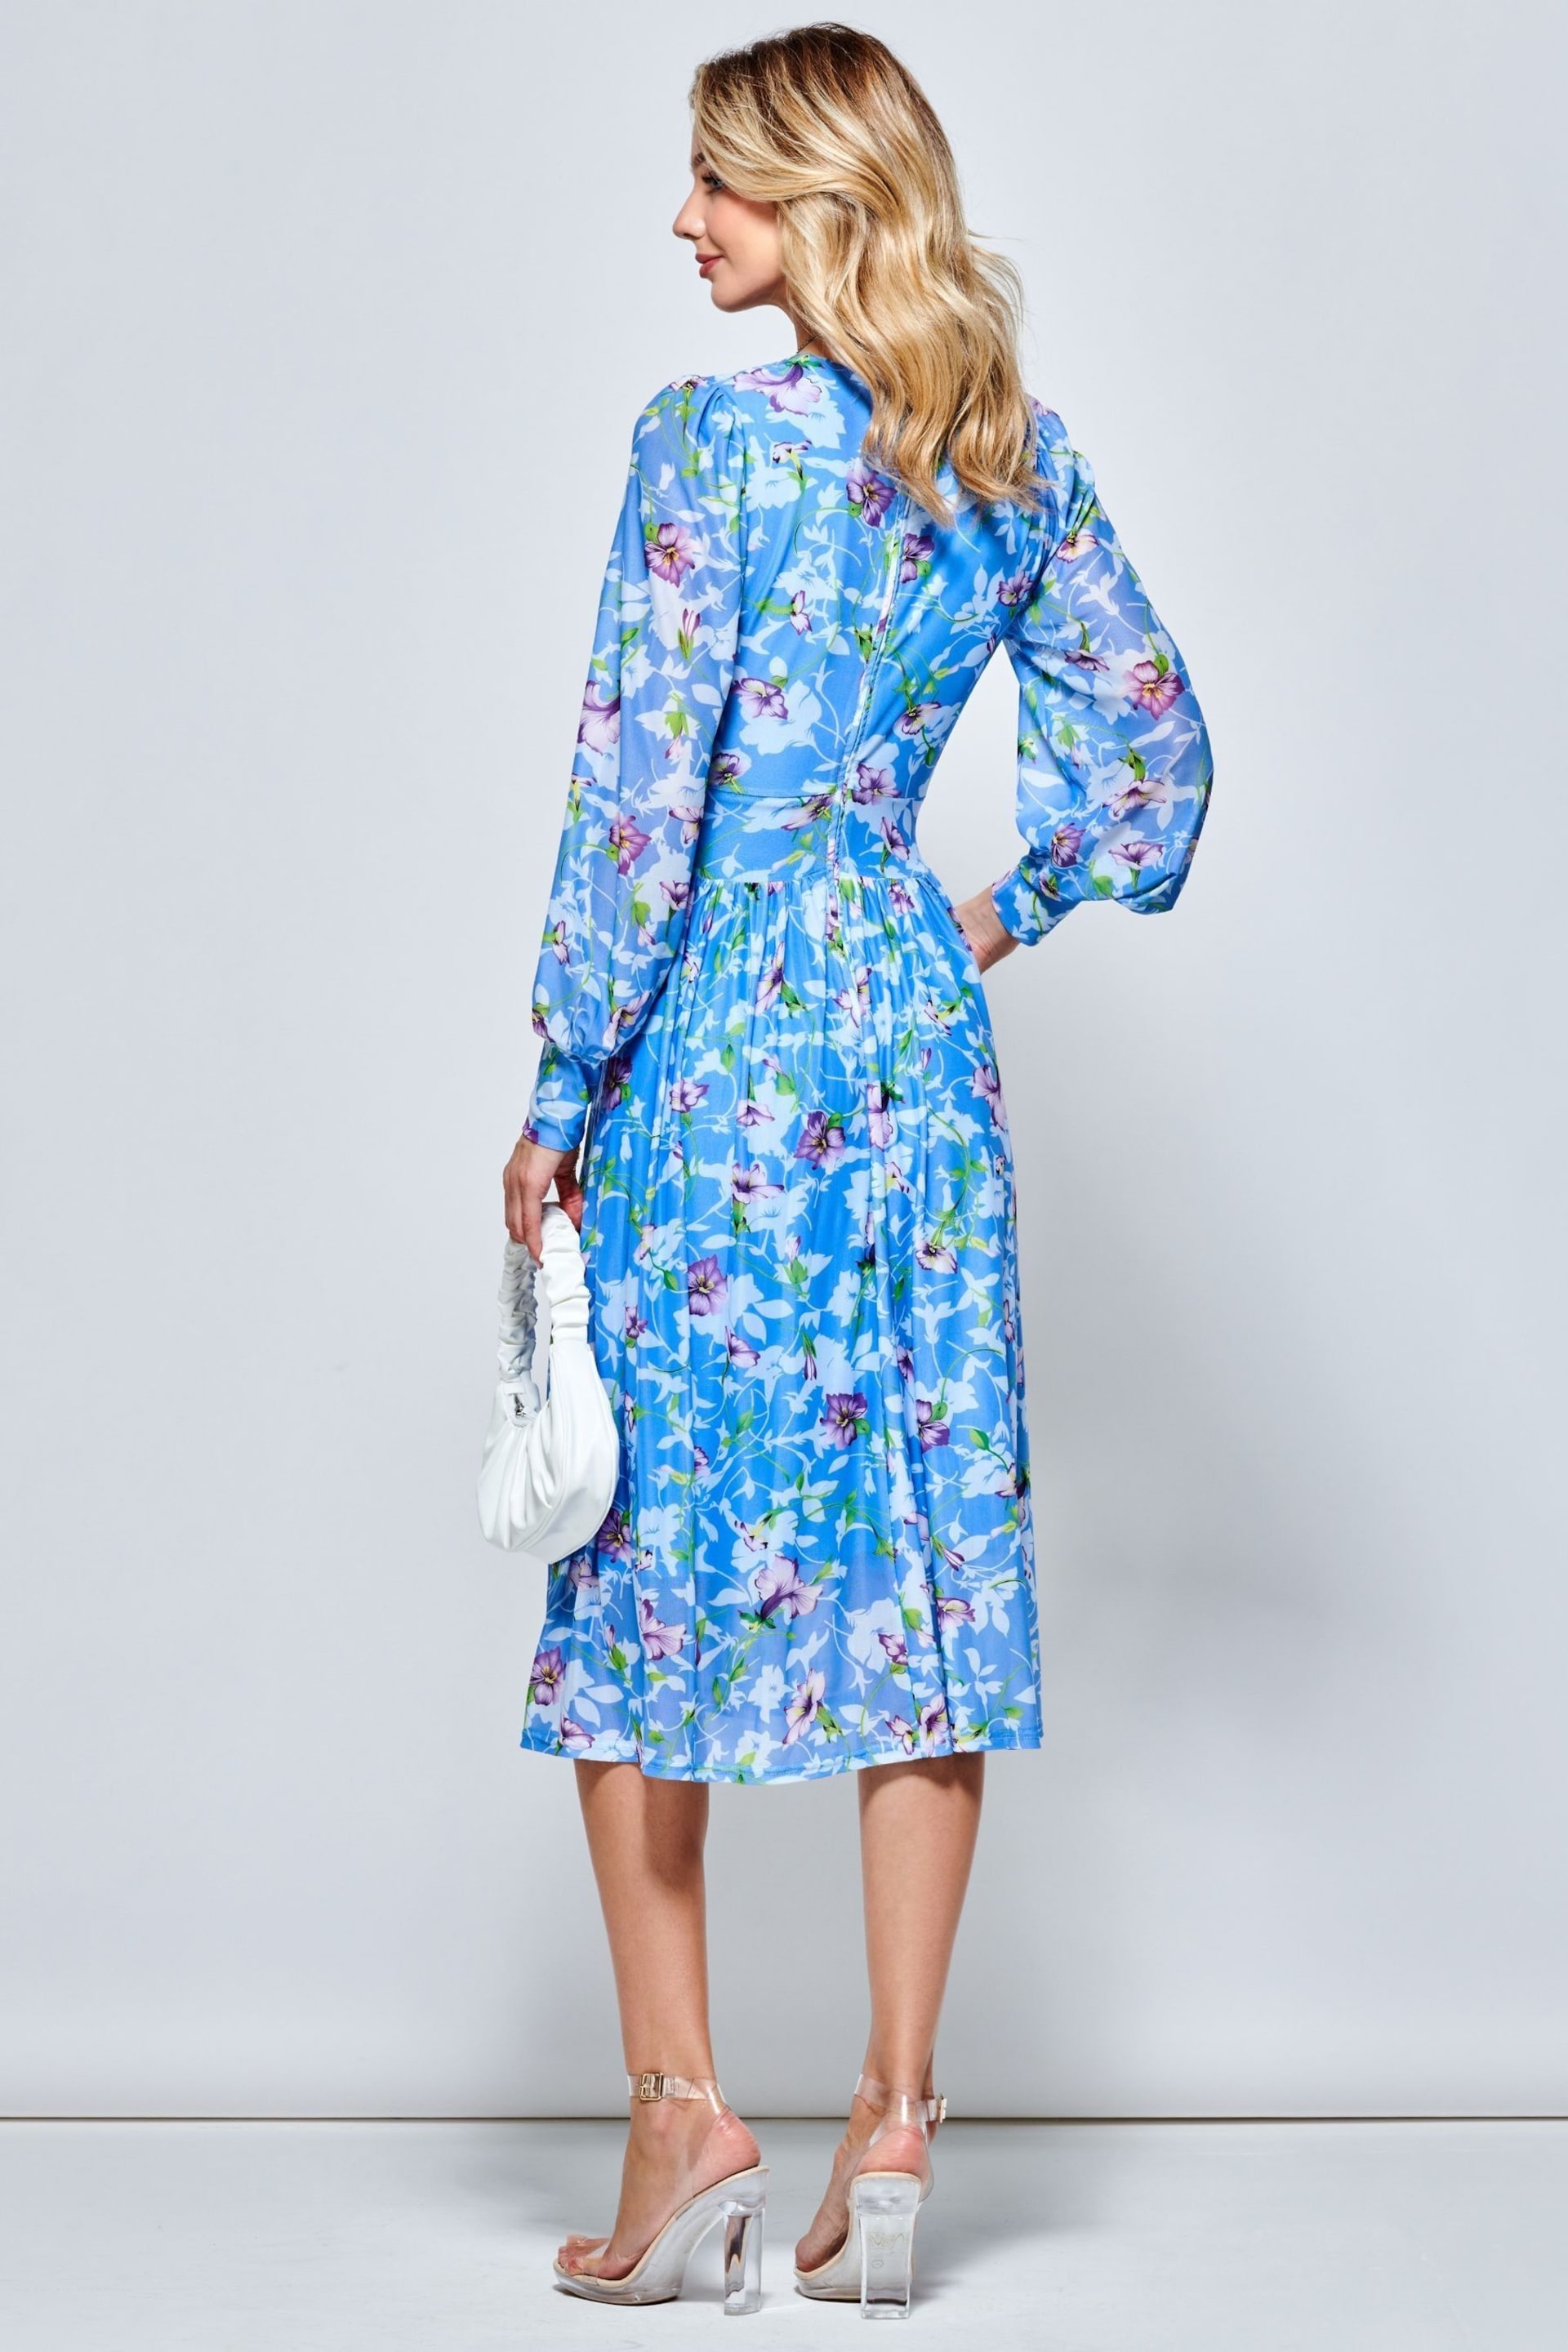 Jolie Moi Light Blue Floral Long Sleeve Mesh Midi Dress - Image 2 of 5